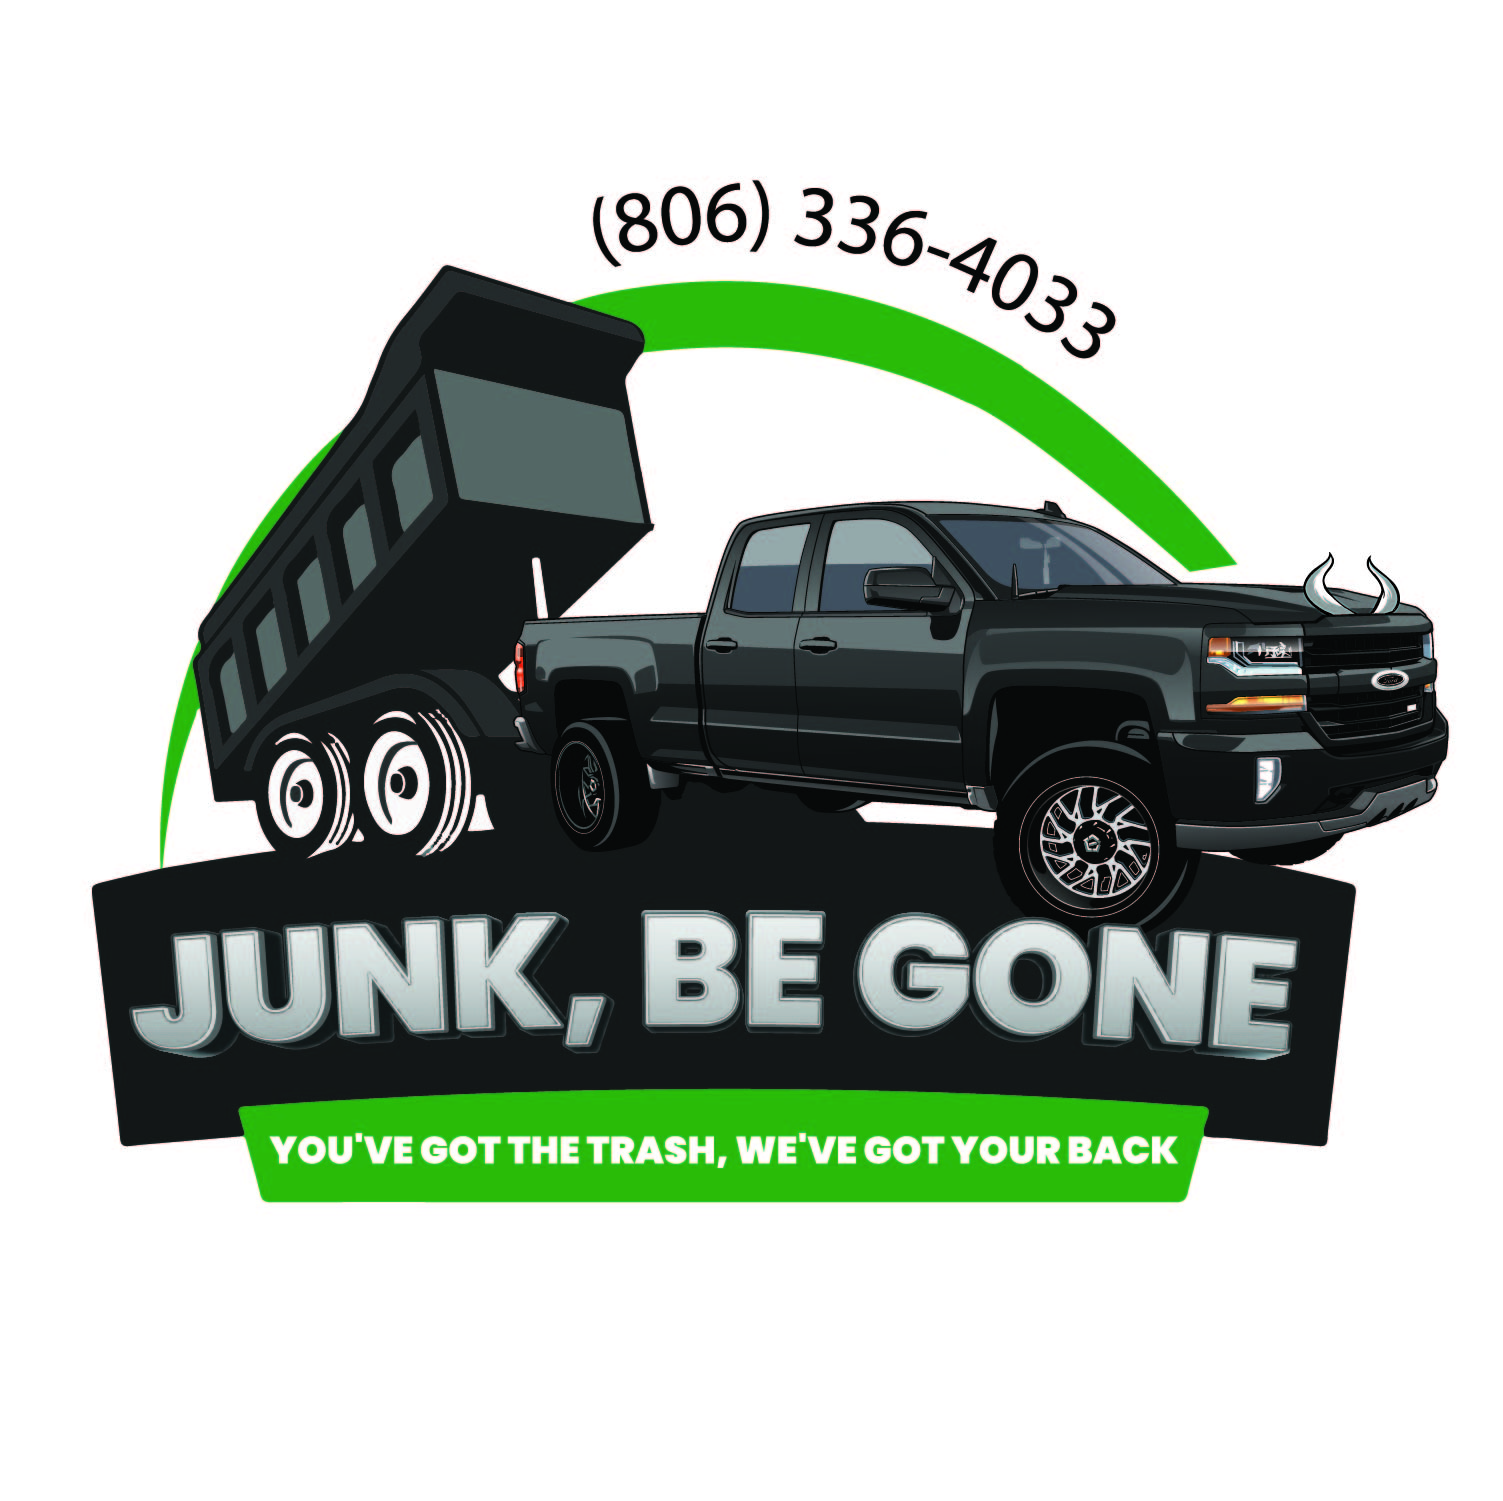 Junk, Be Gone Logo